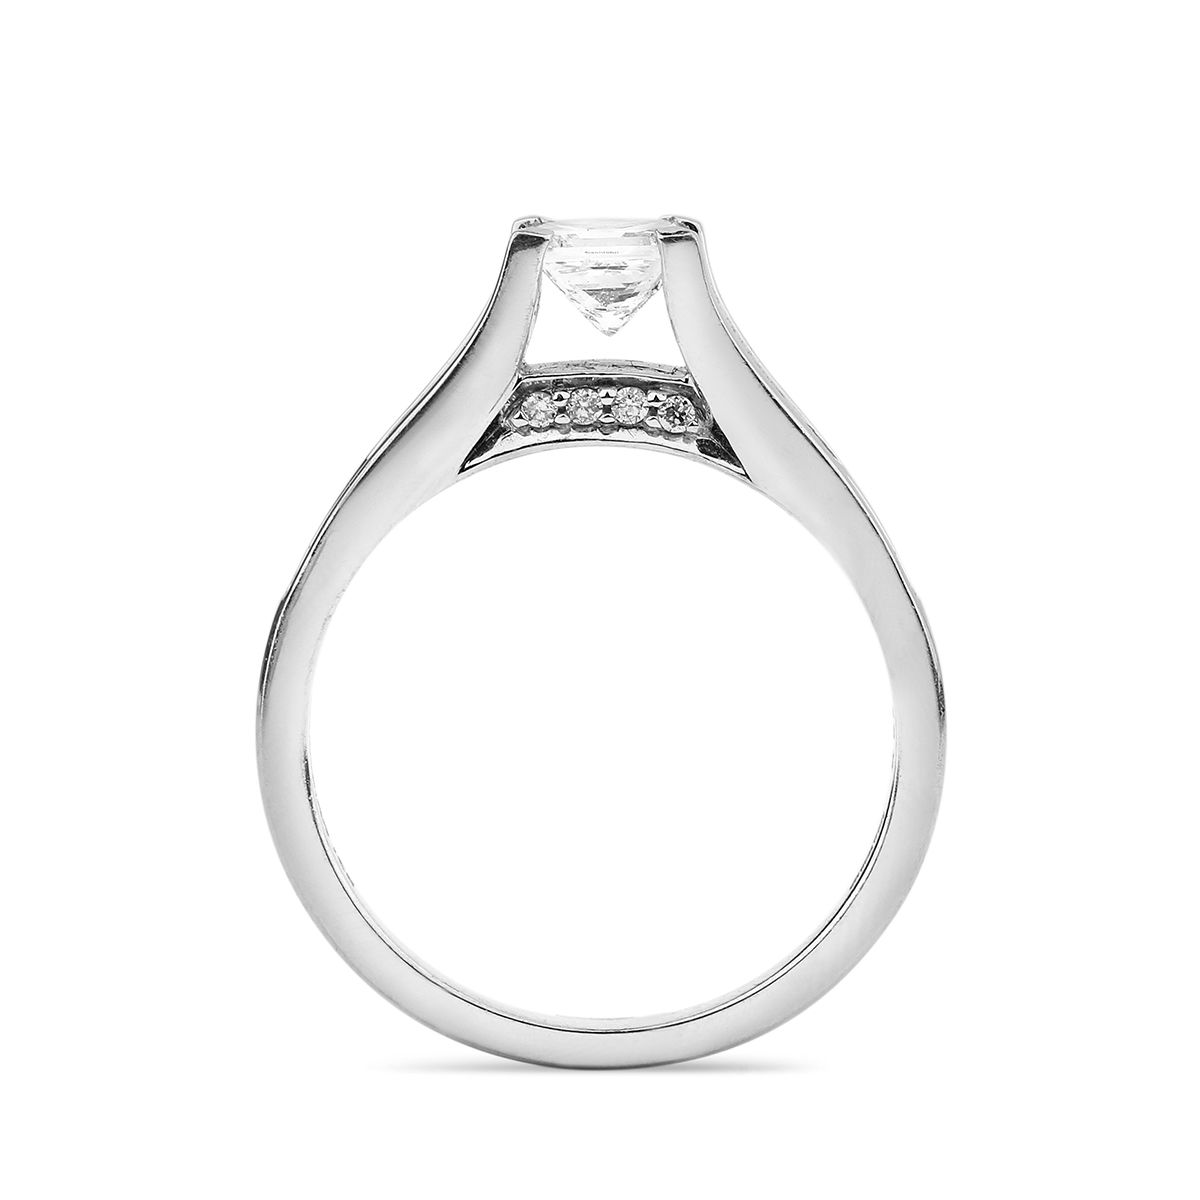  White Diamond Ring, 0.50 Carat, Princess shape